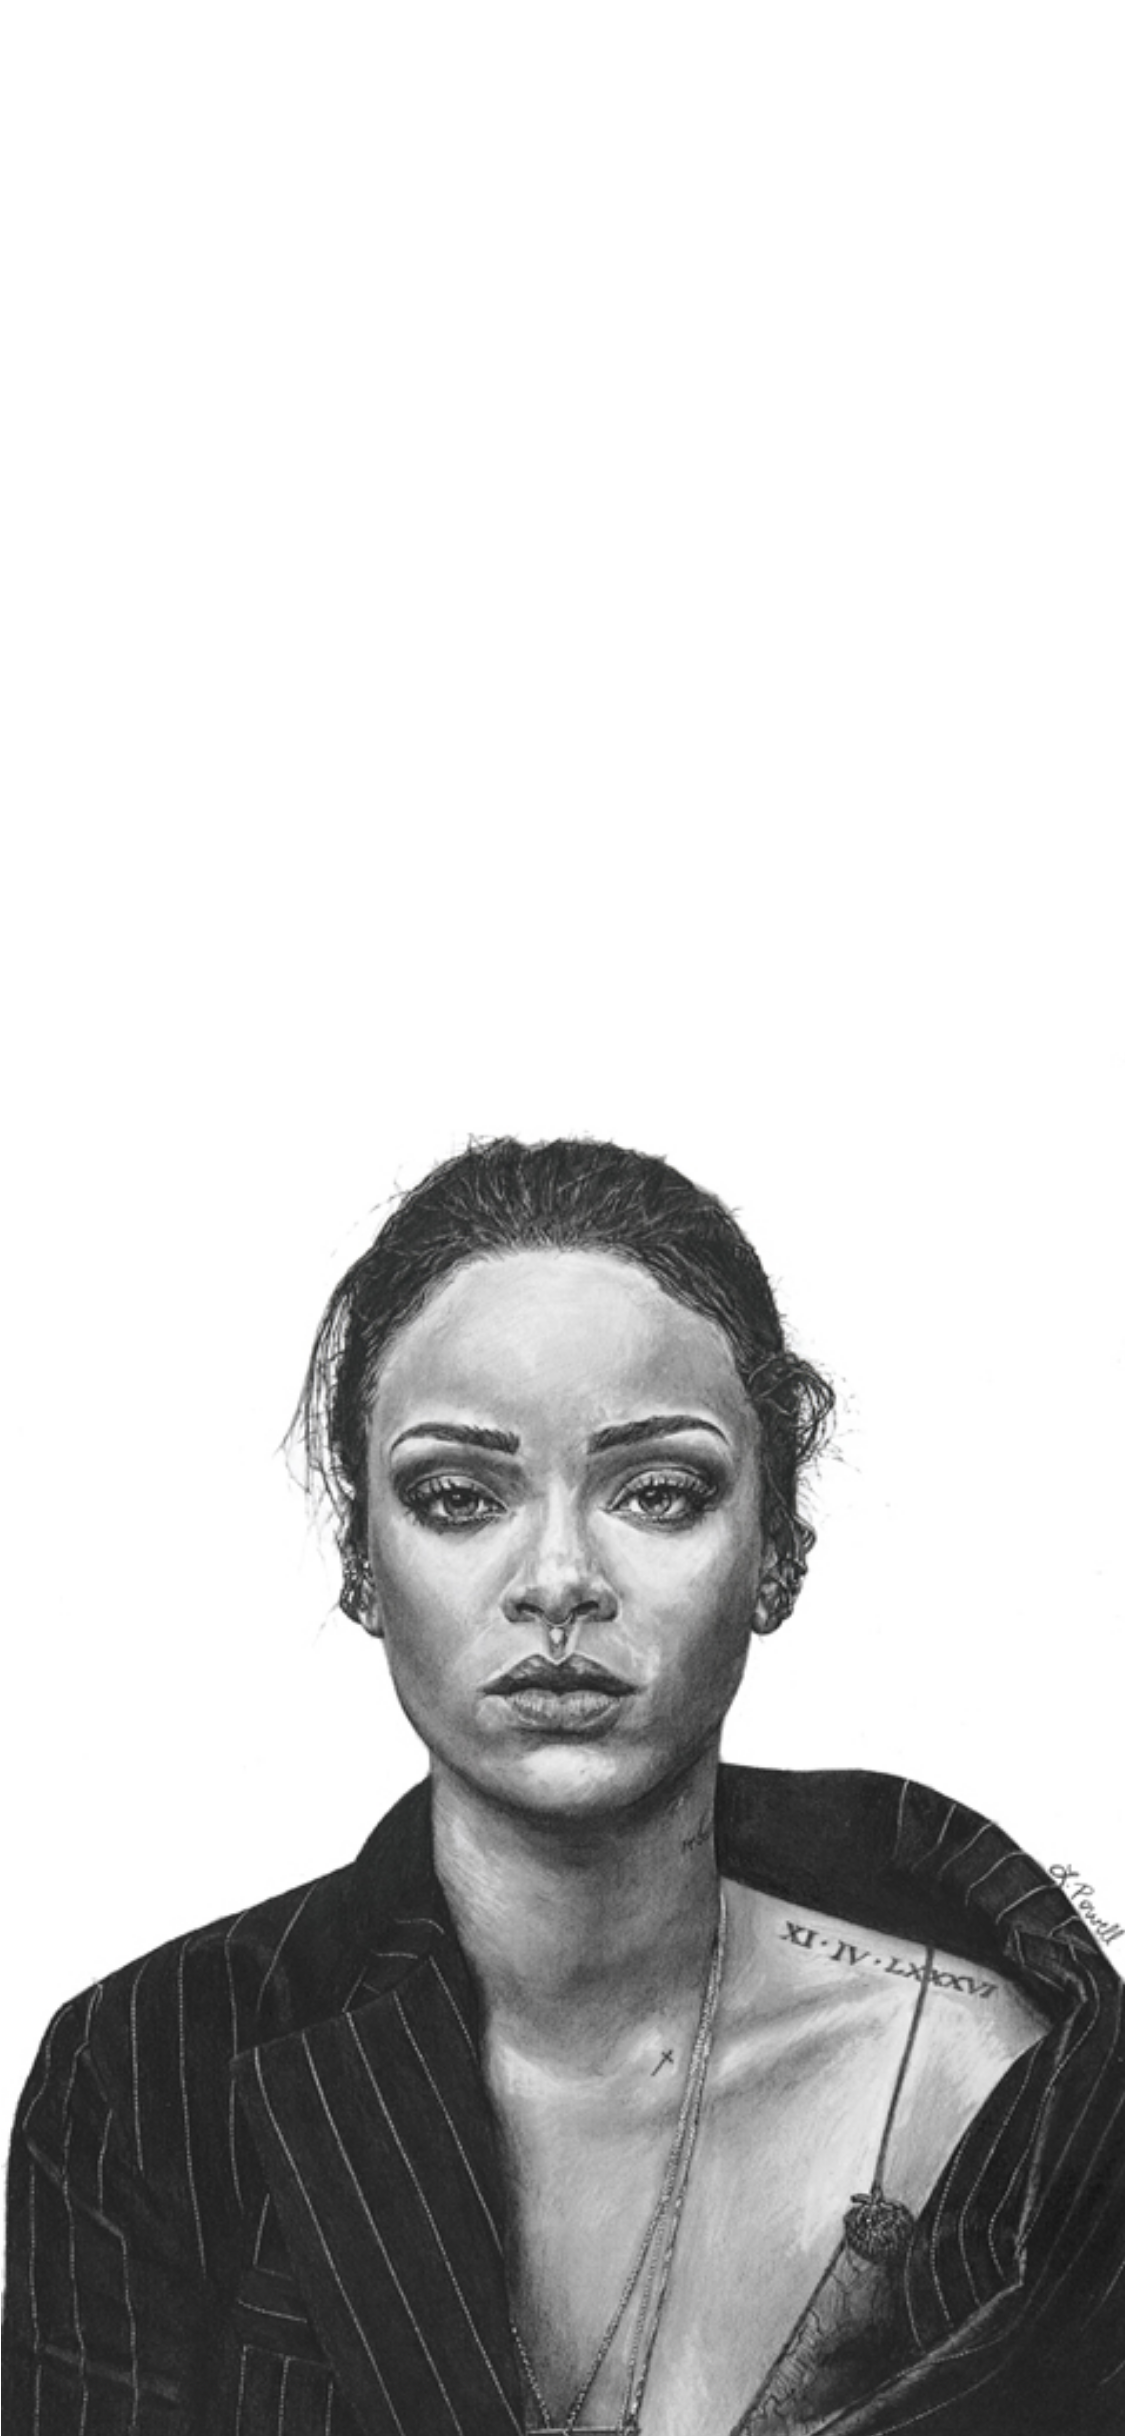 Rihanna Monochrome Wallpapers